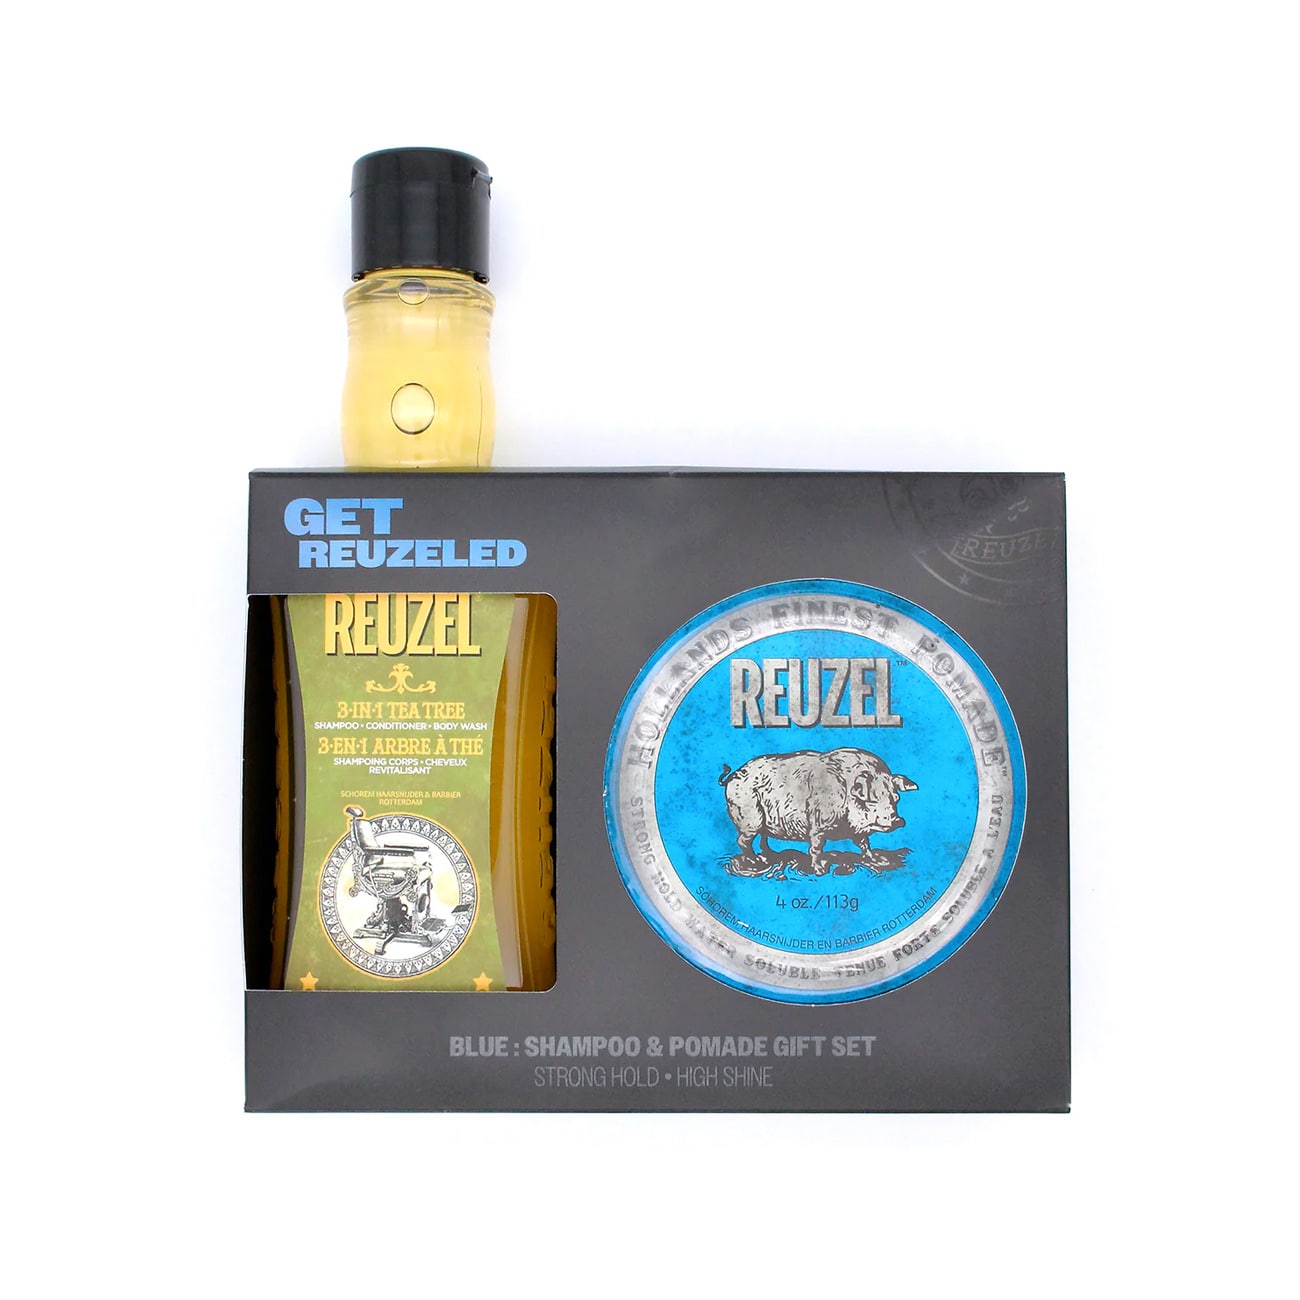 Blue: Shampoo & Pomade gift set - Reuzel